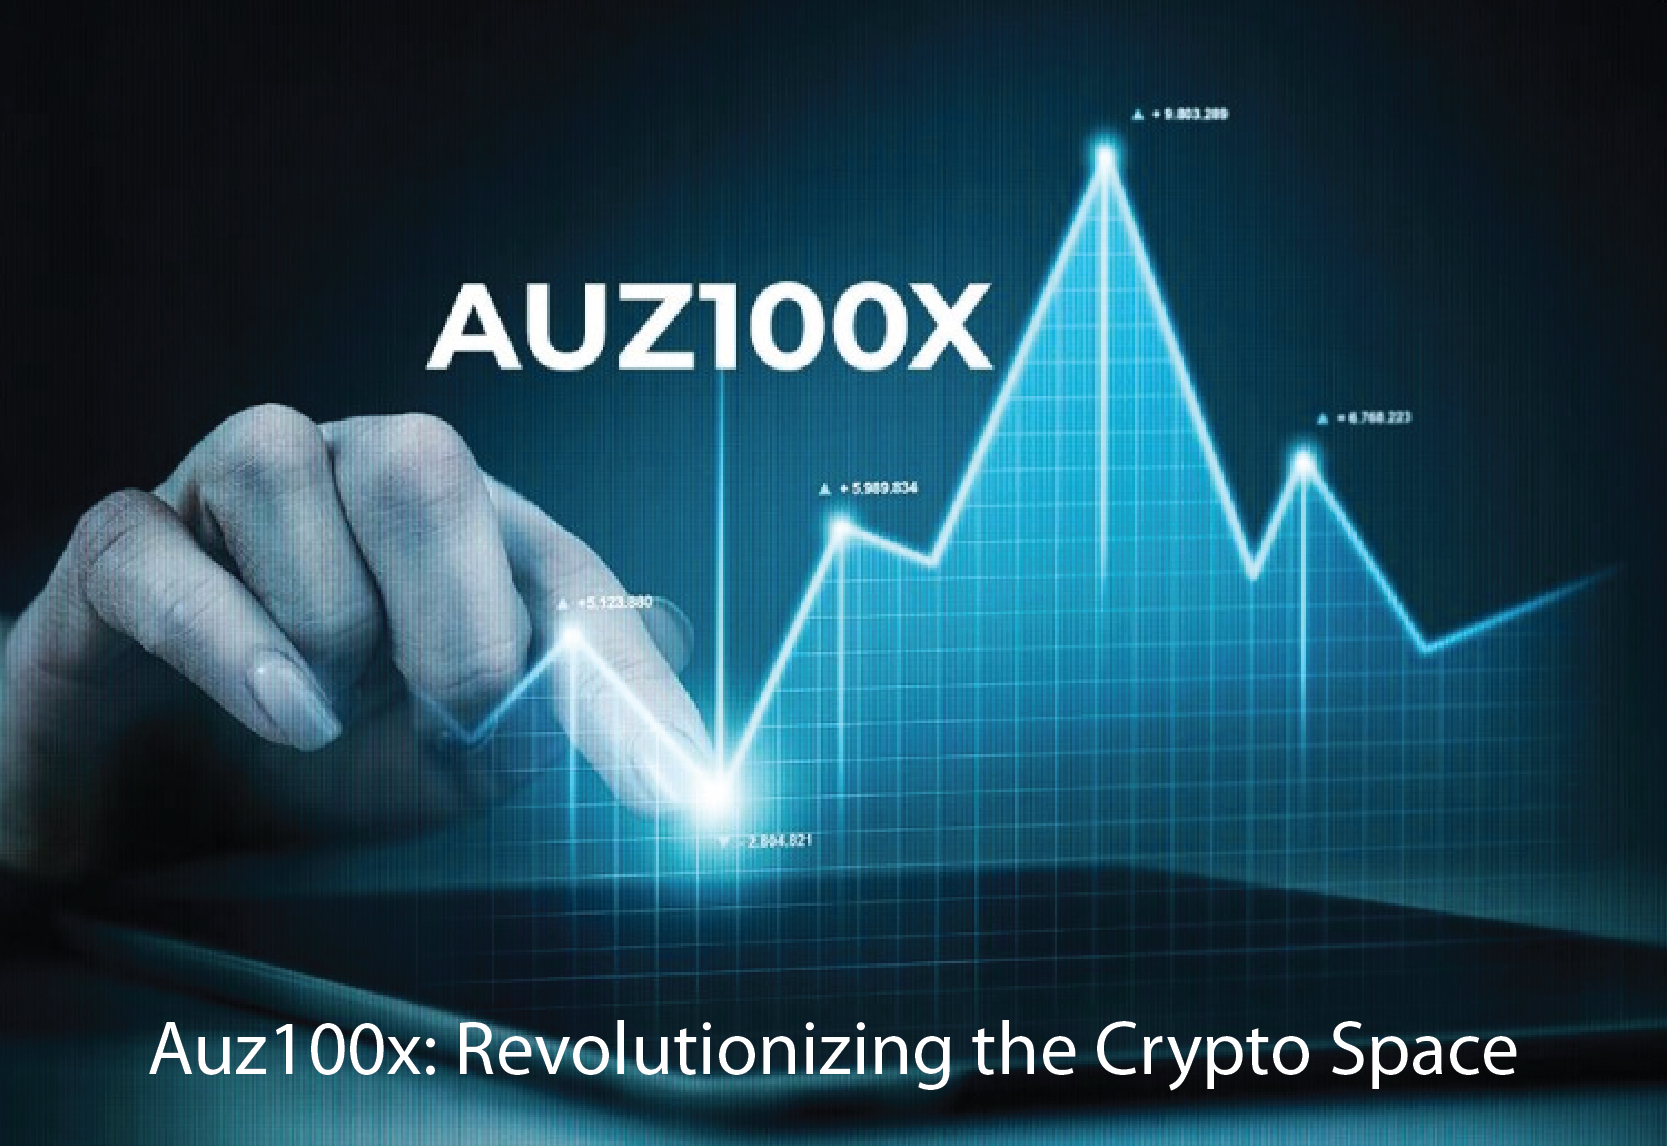 Auz100x: Revolutionizing the Crypto Space